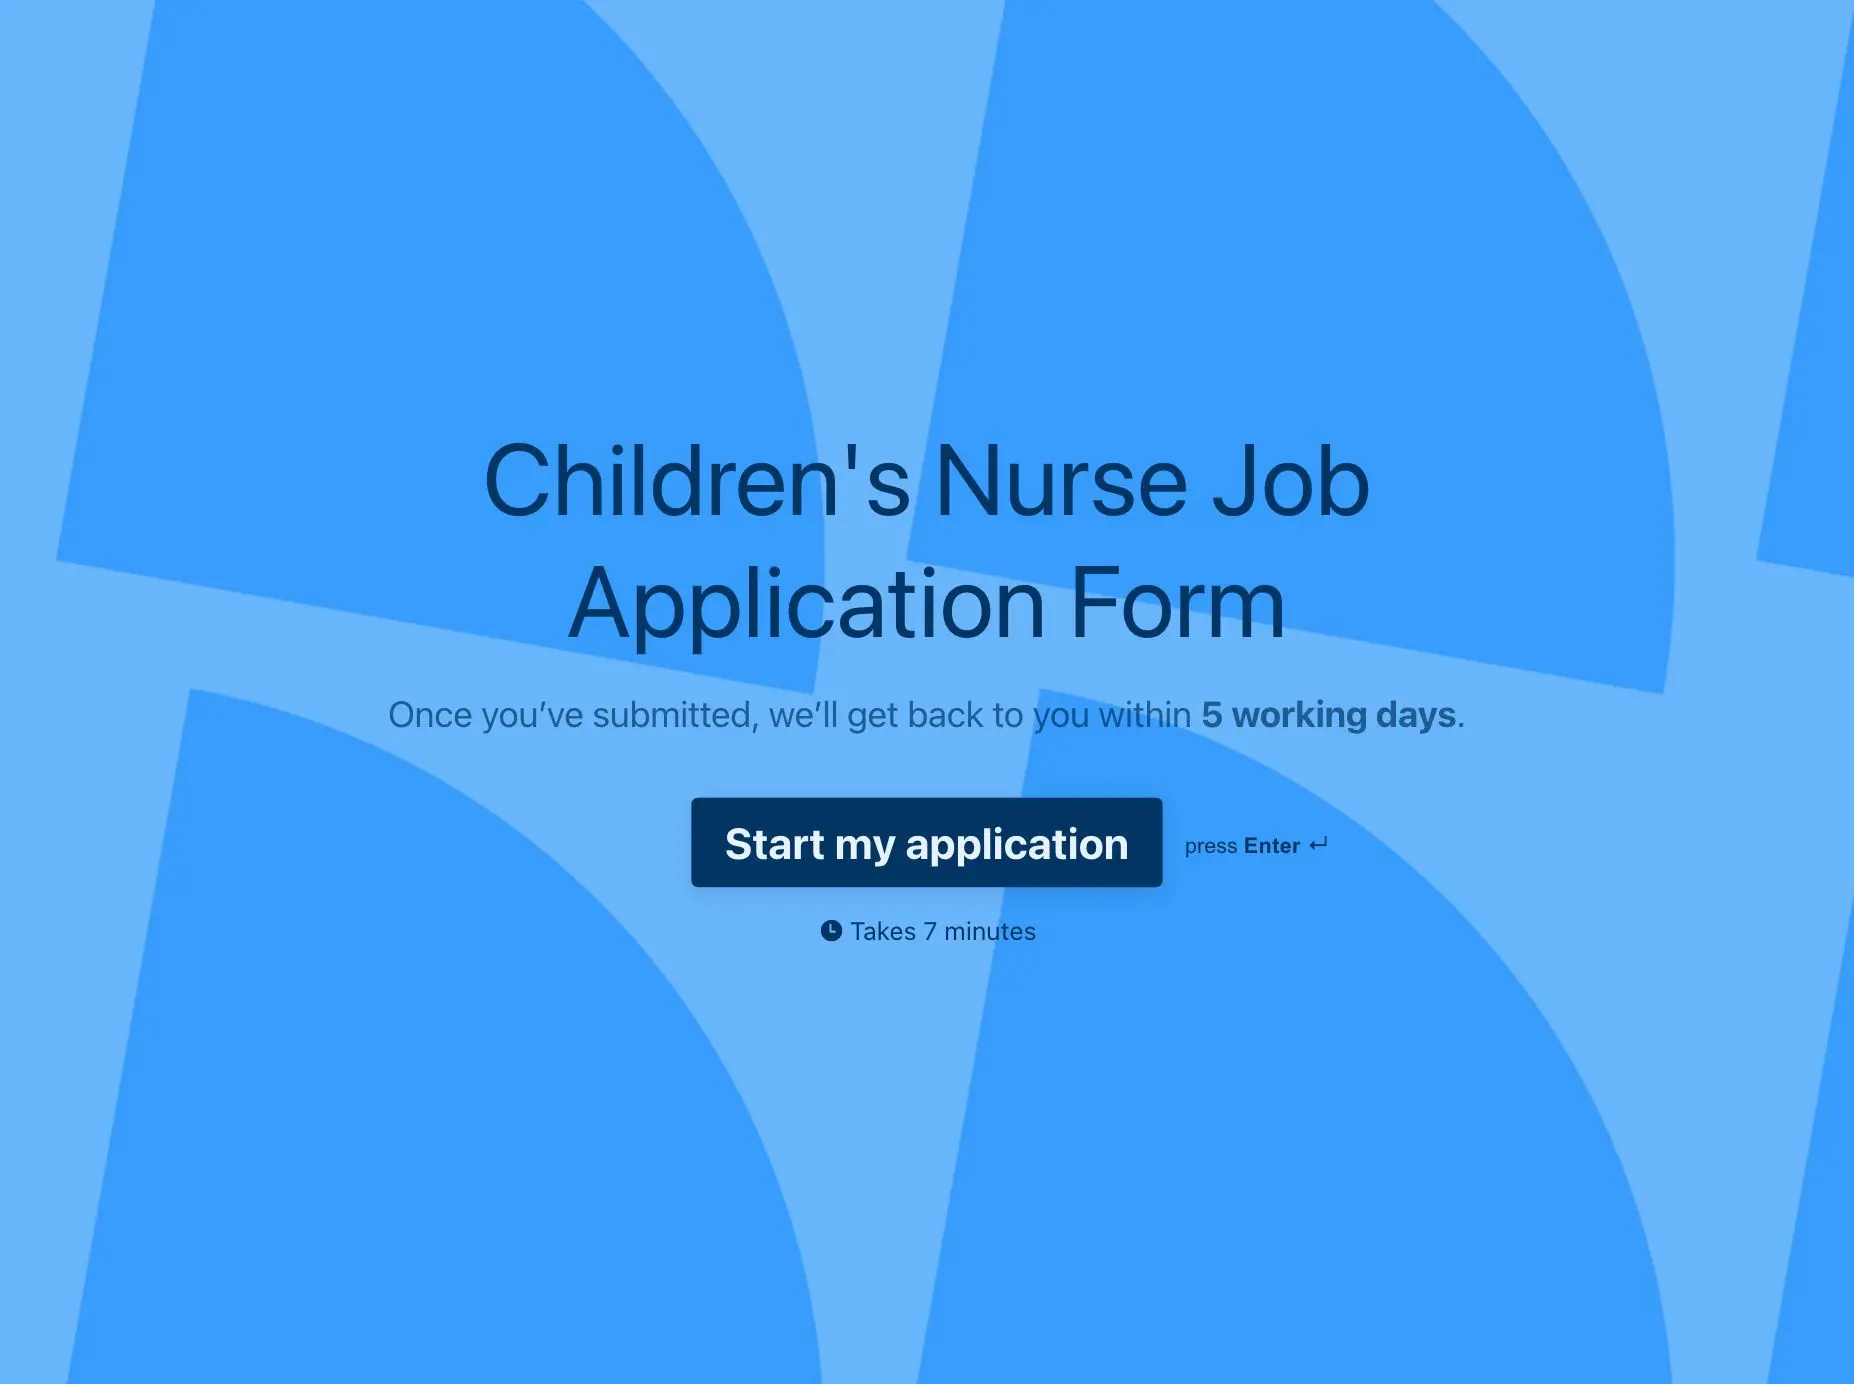 Children's nurse job application form template Hero